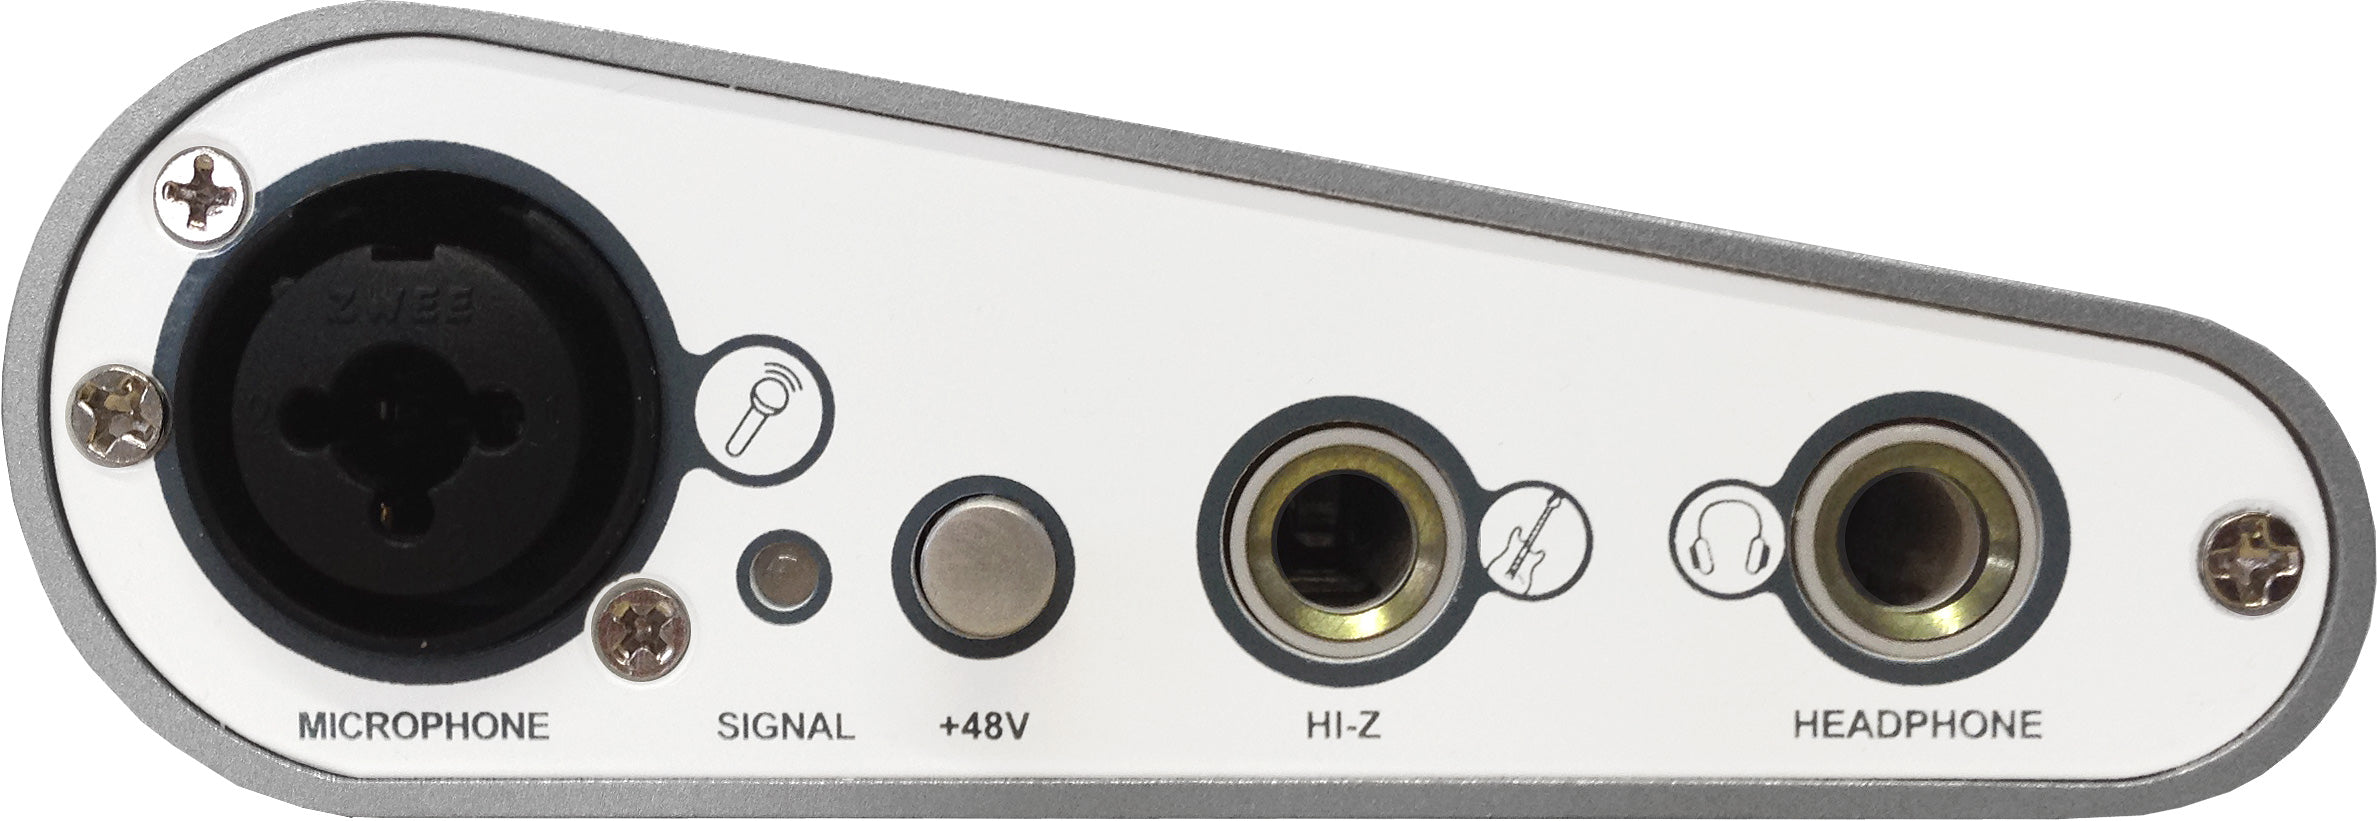 ESI Audio MAYA22 USB - Silver - Flexible High Performance 24-bit USB Audio Interface - Silver